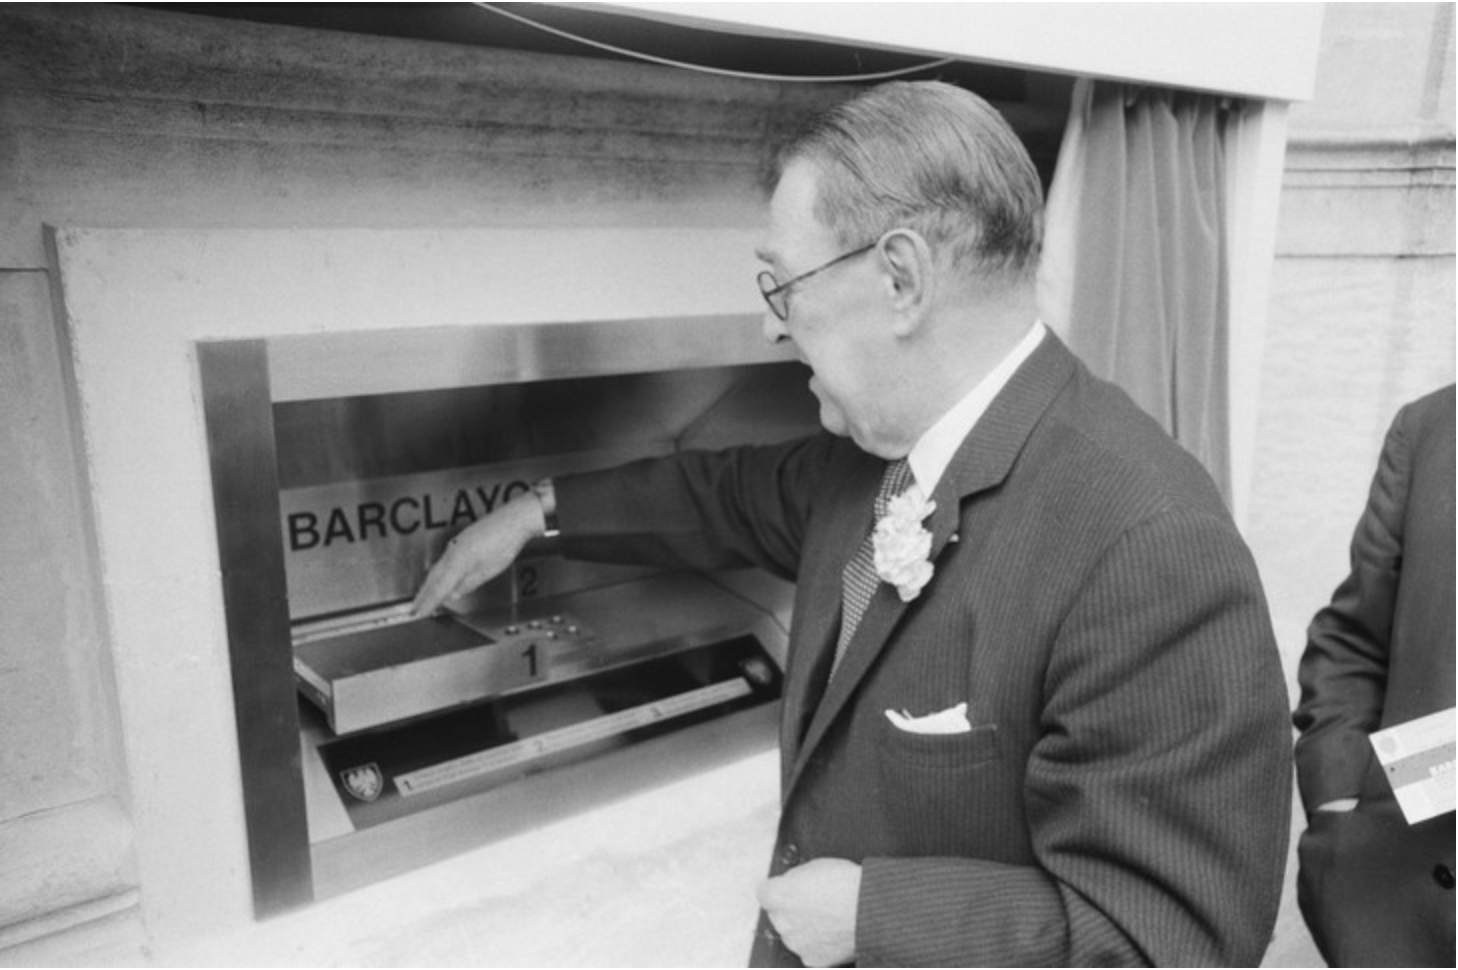 First atm. Первый Банкомат 1967 год. Первый Банкомат в мире. Первый Банкомат в Лондоне. 27 Июня Банкомат.